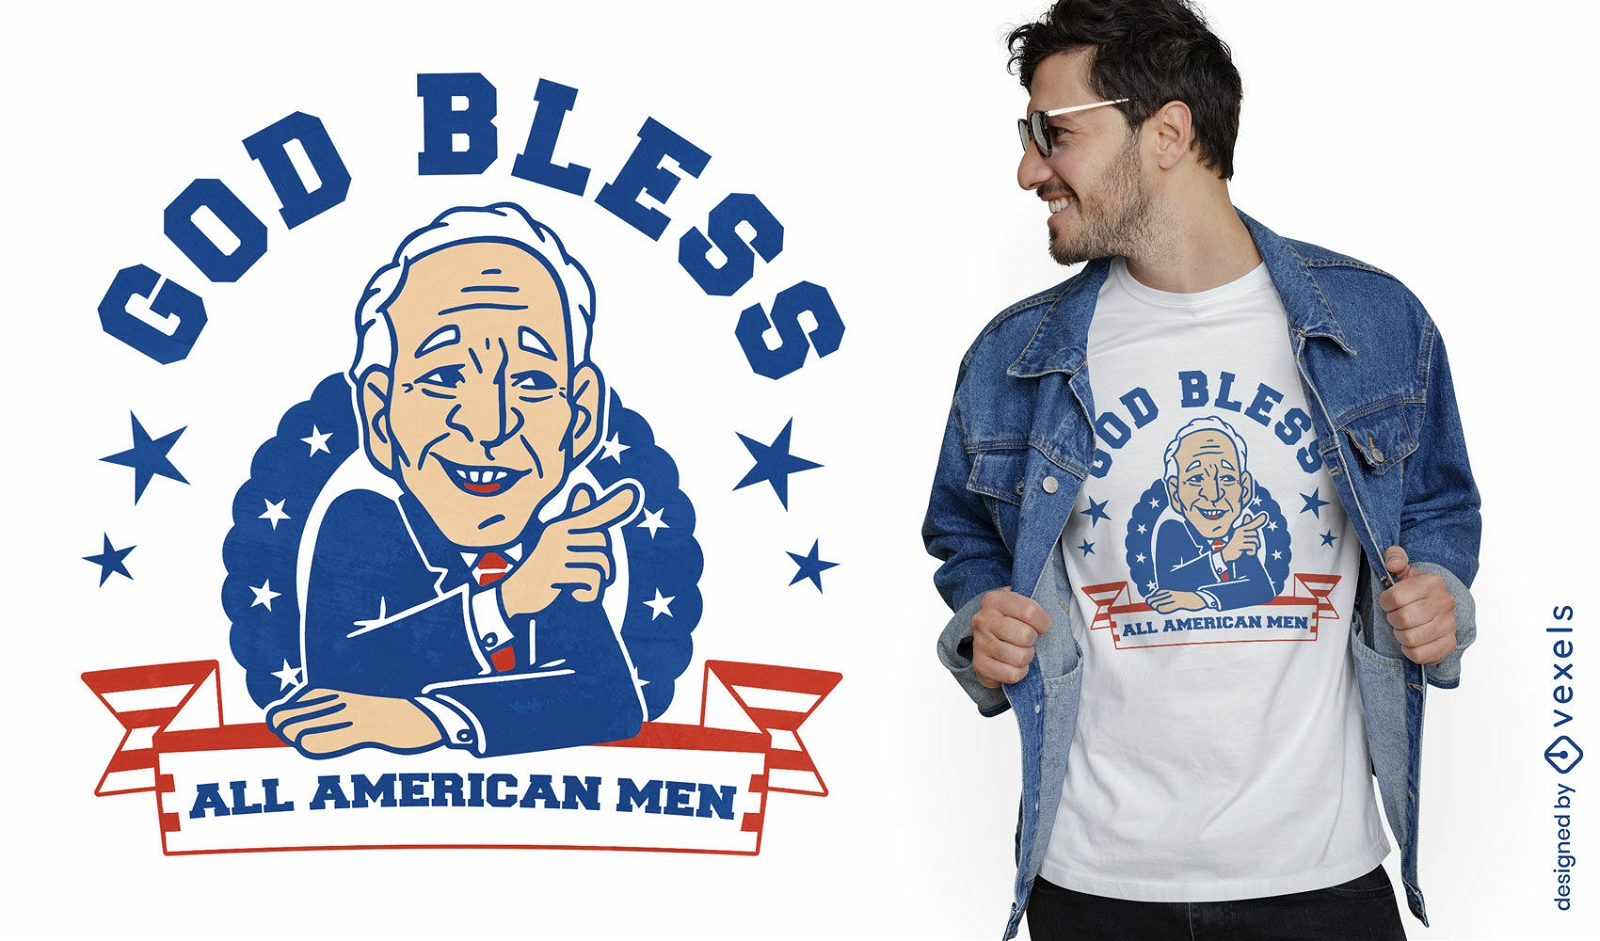 Gott segne amerikanische Männer T-Shirt-Design